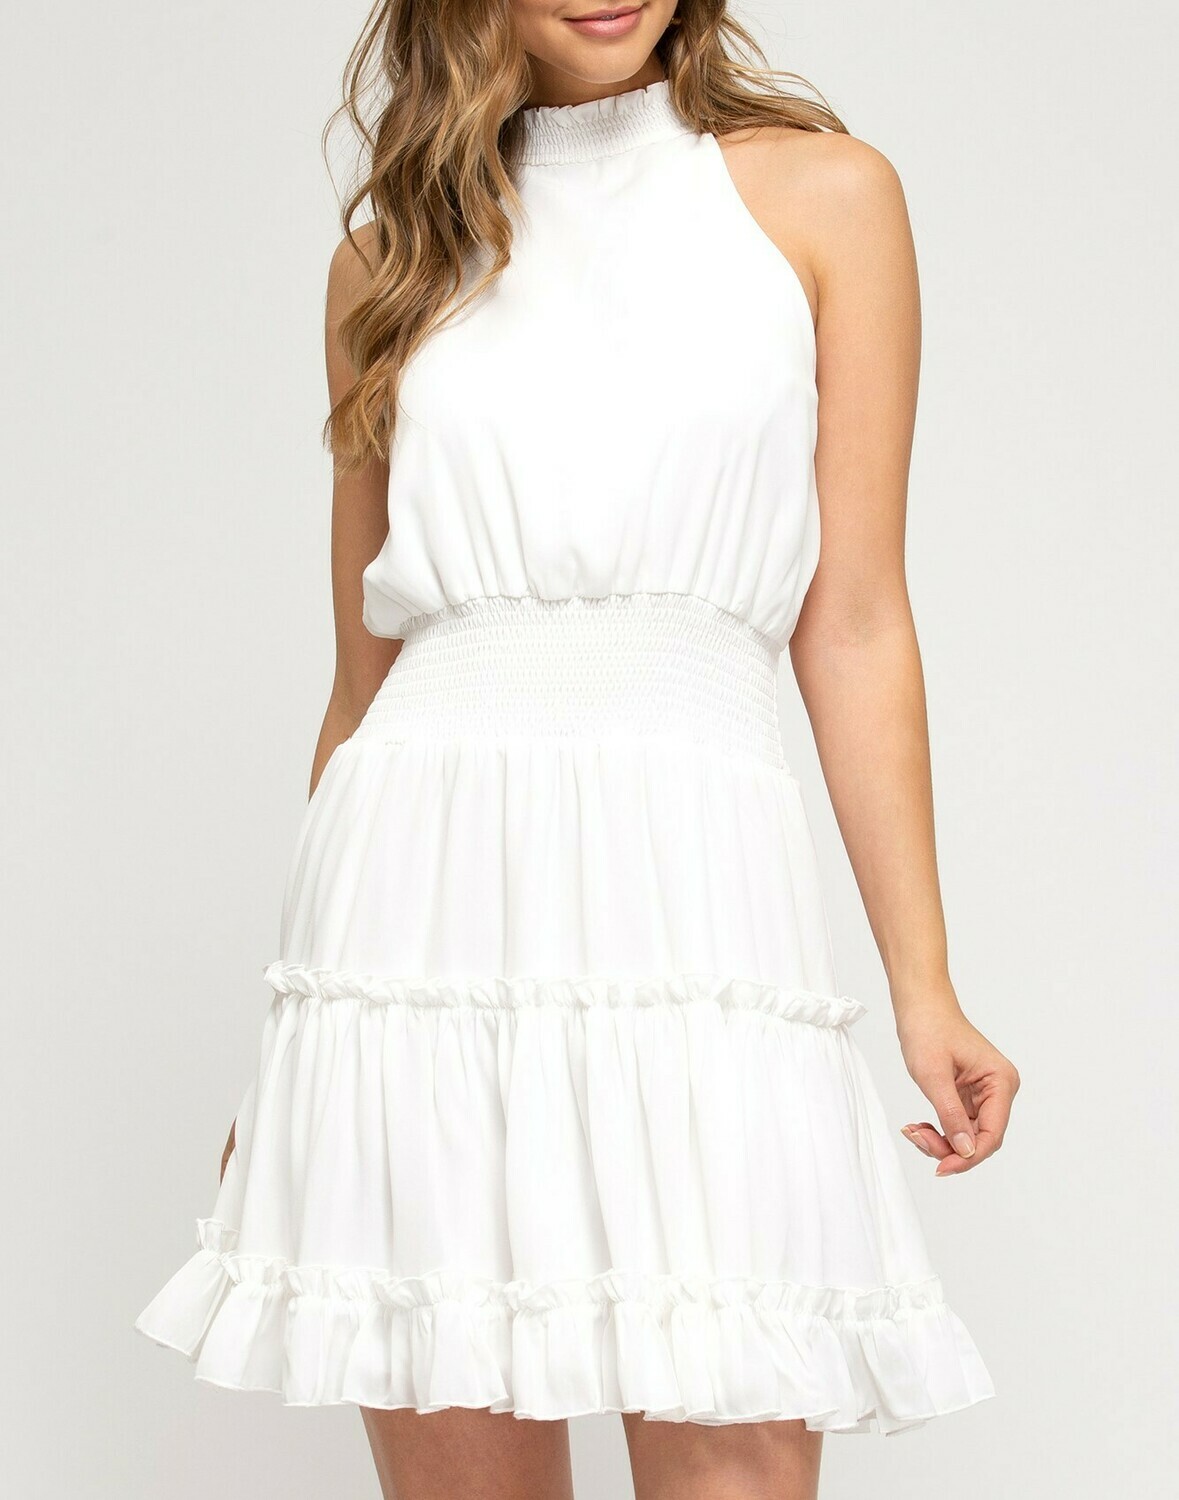 Off White Smocked Sleeveless Dress